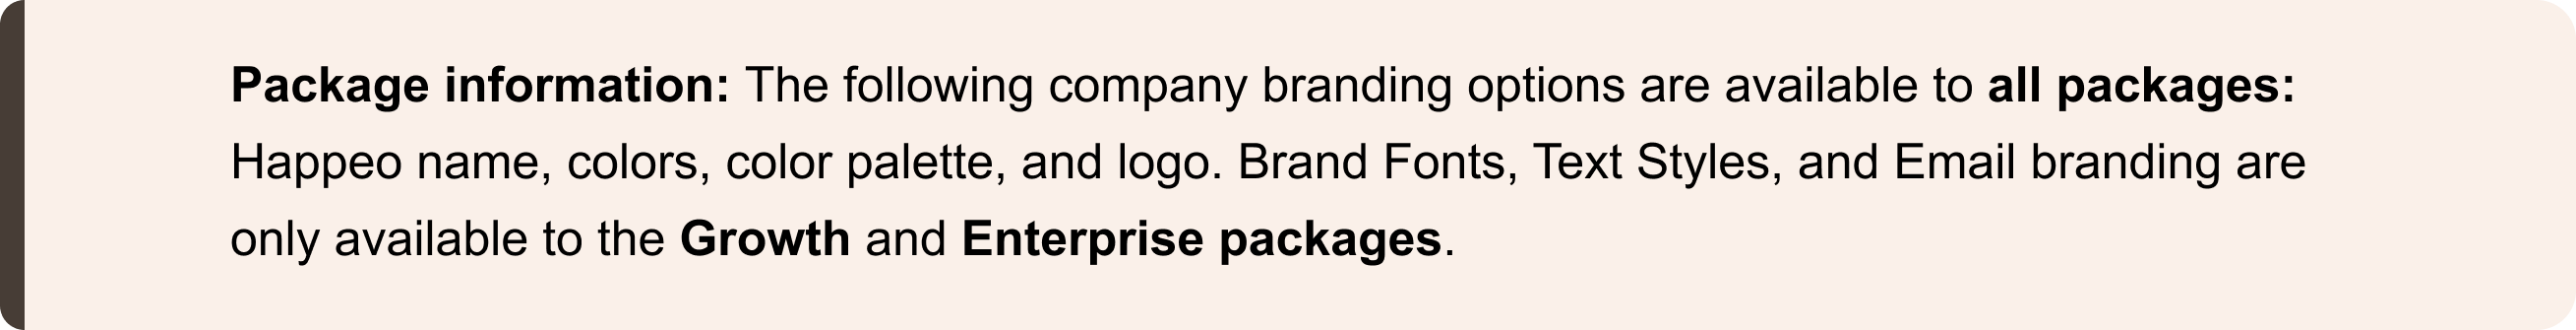 Company_Branding_Options_1.png